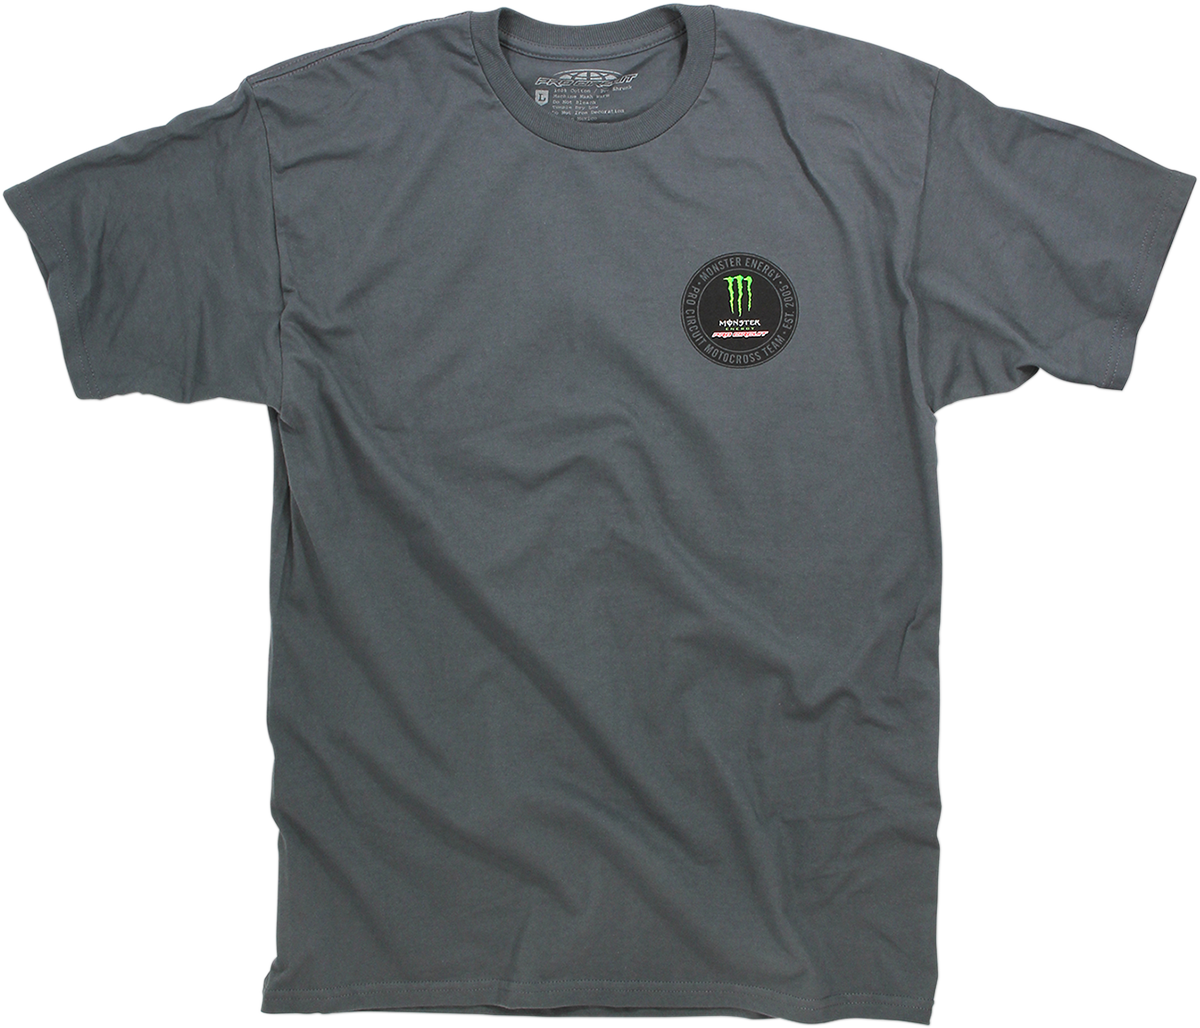 PRO CIRCUIT Patch T-Shirt - Gray - Small 6411560-010